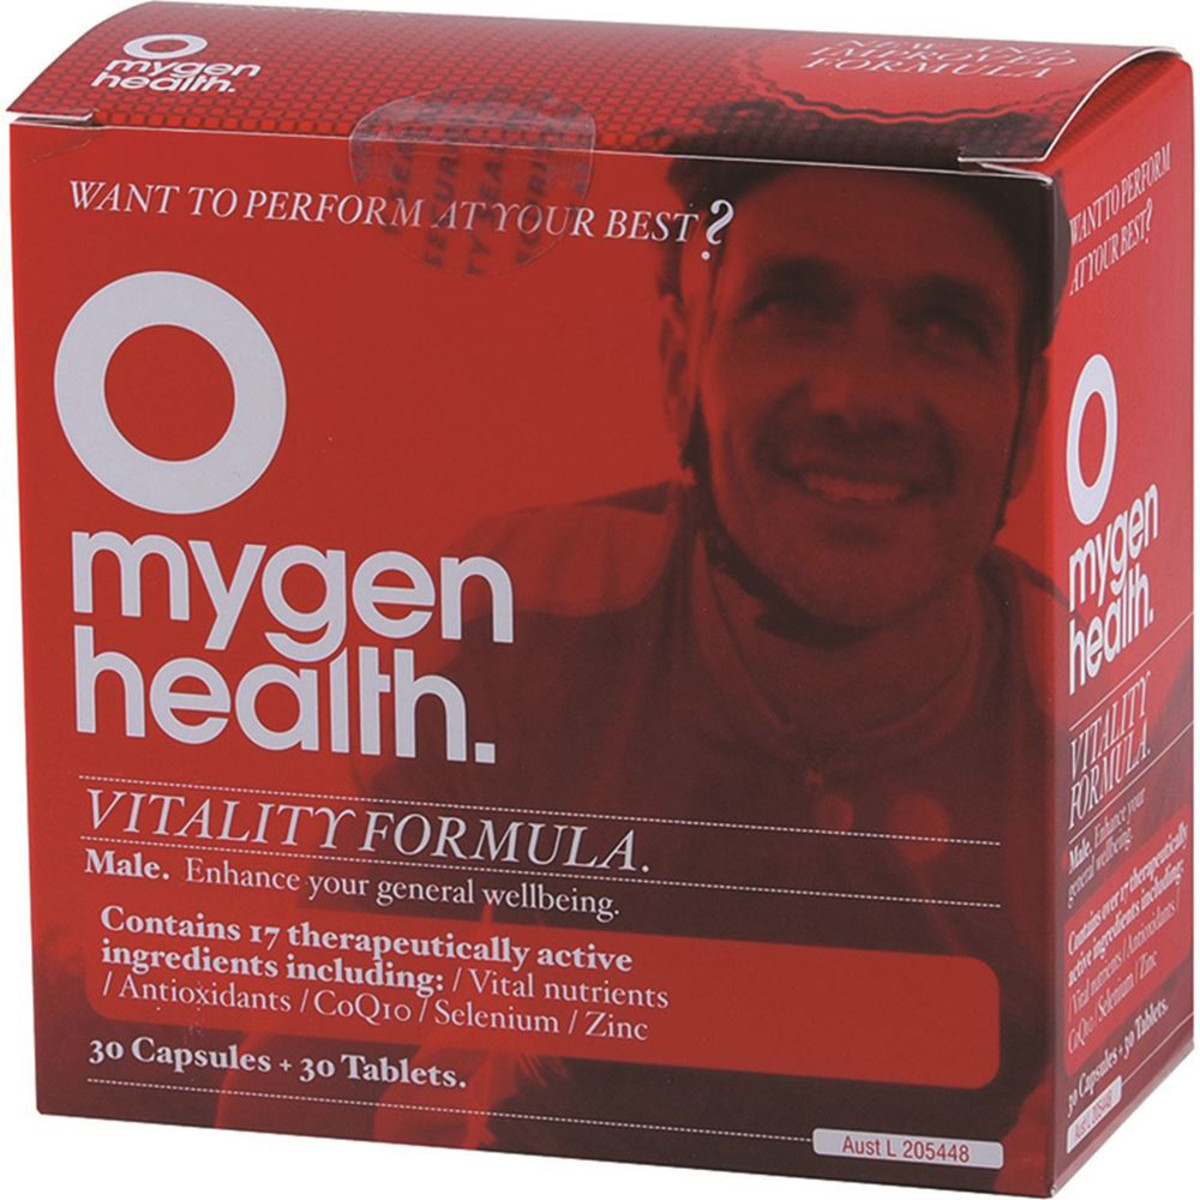 MYGEN HEALTH - Health Vitality Formula Male